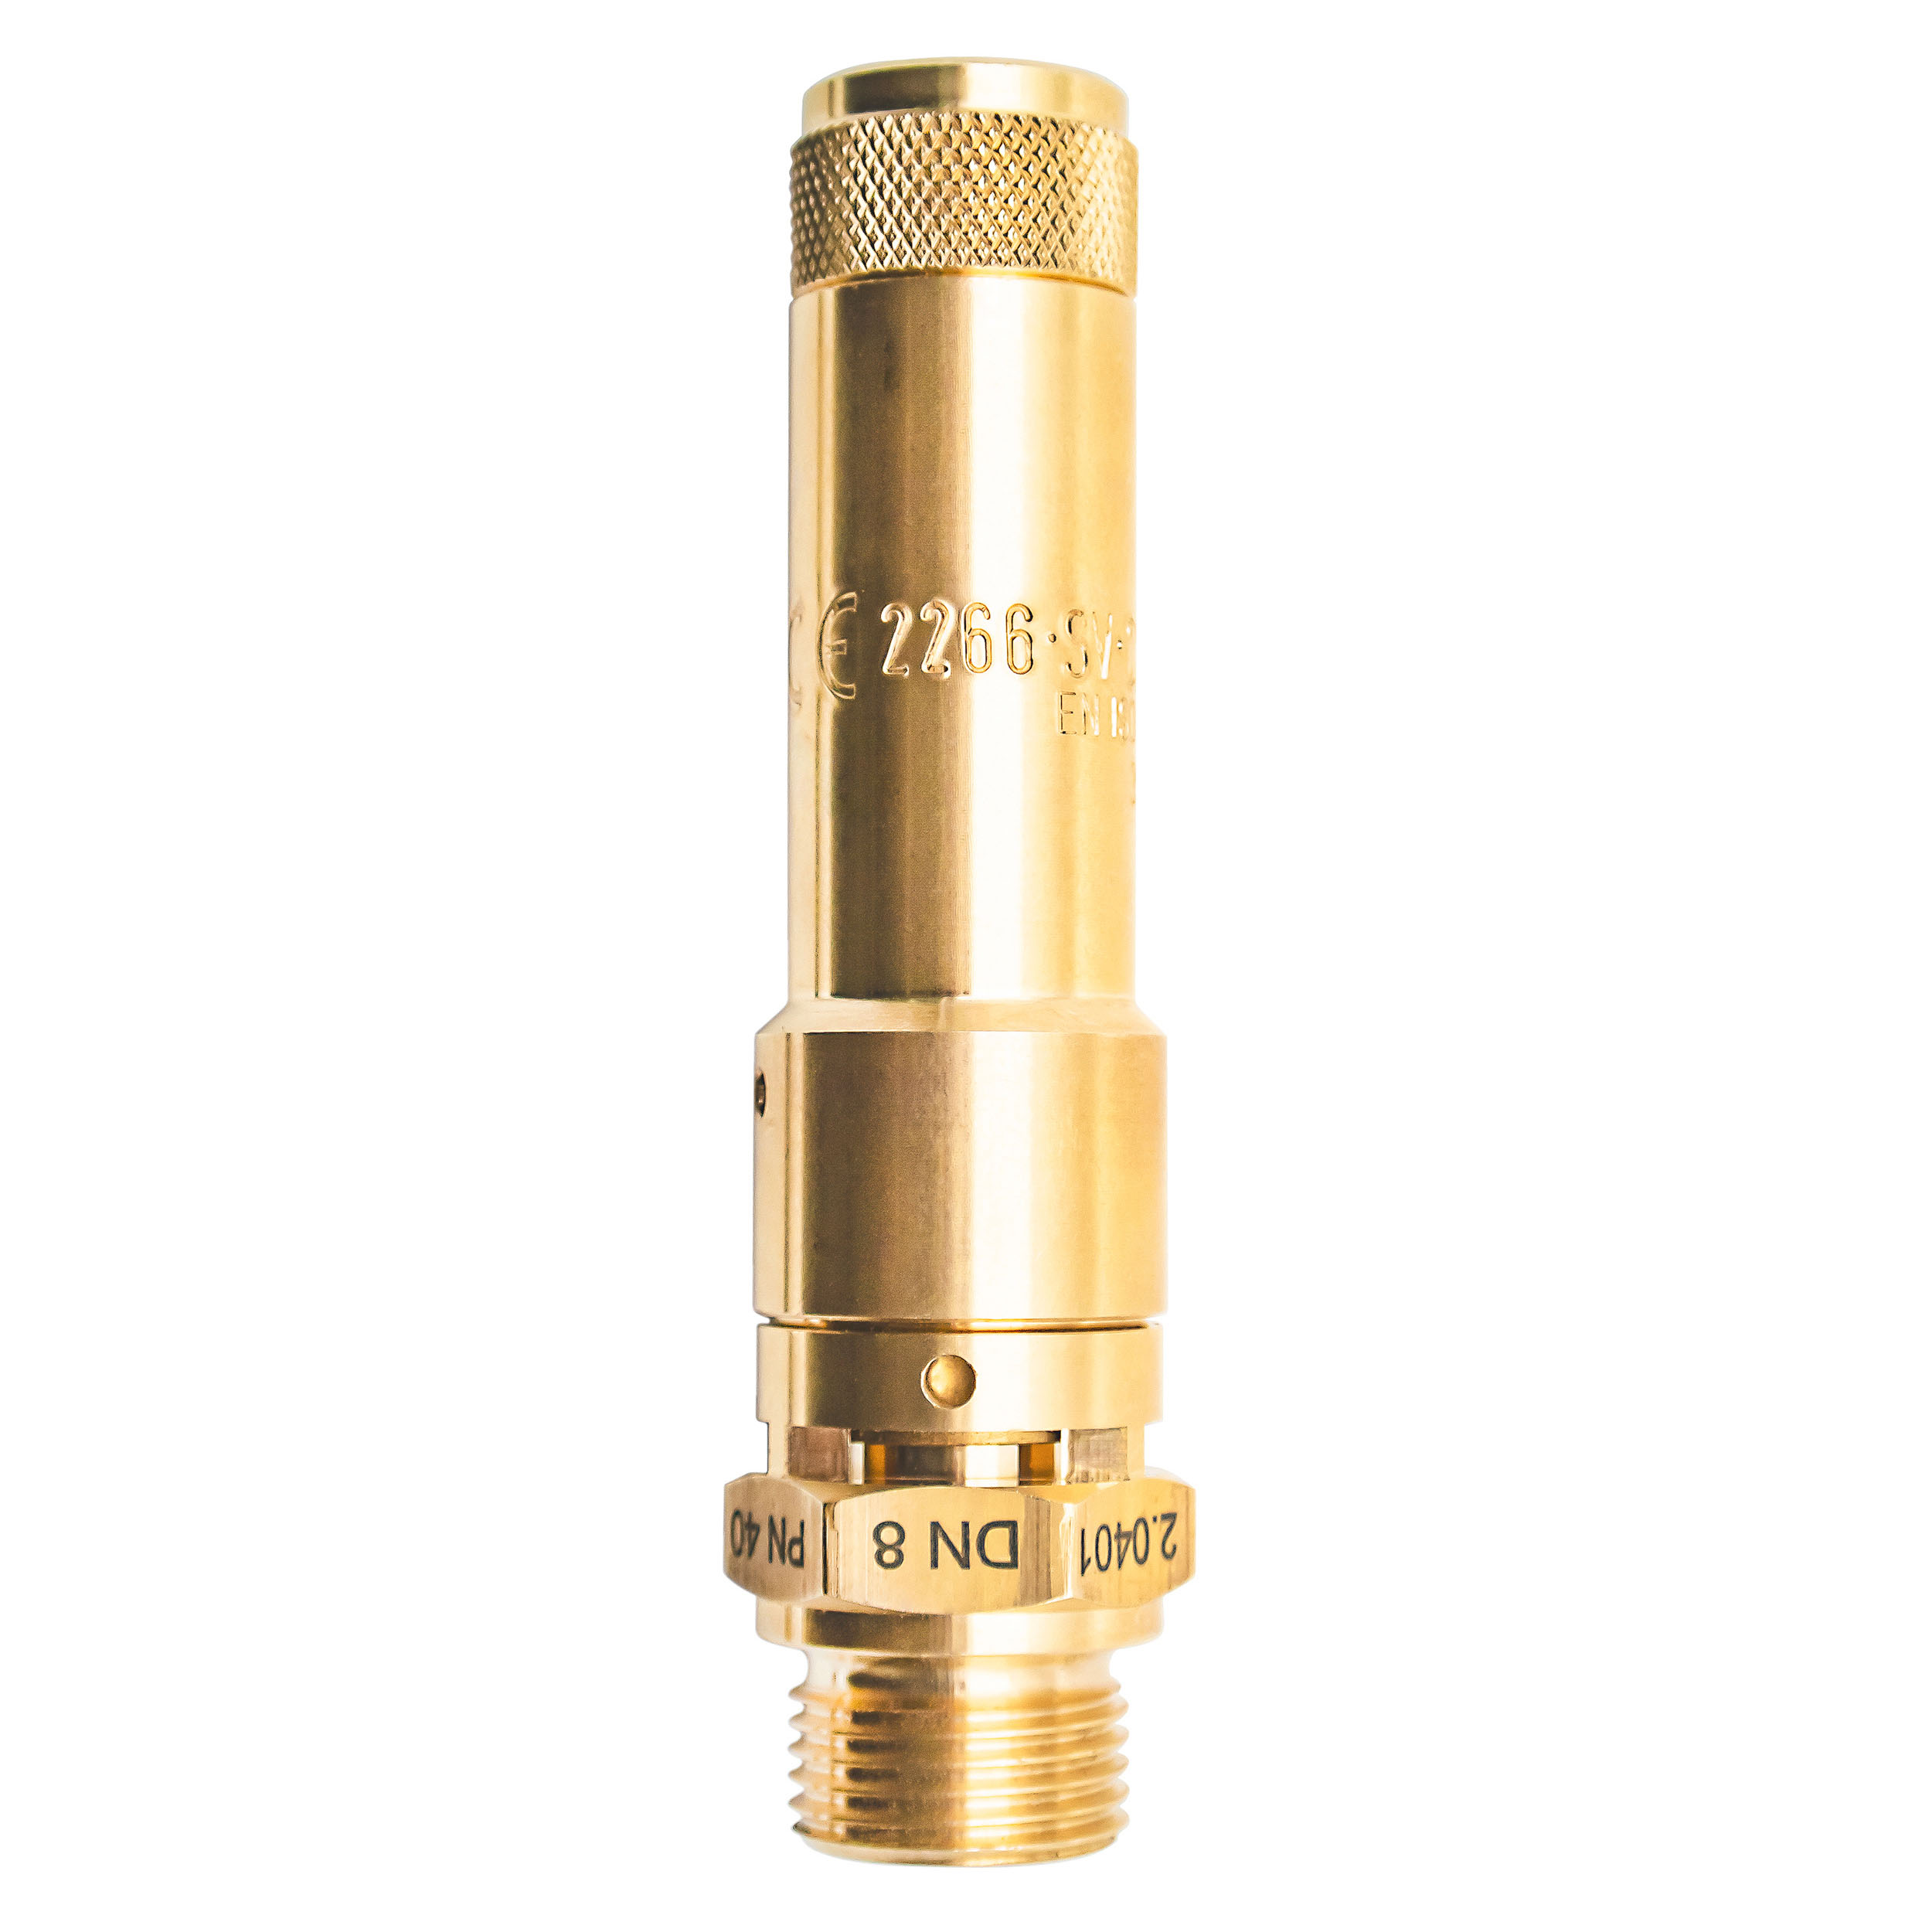 Savety valve component tested DN 8, G⅜, set pressure: 5.8 bar (84,1 psi)